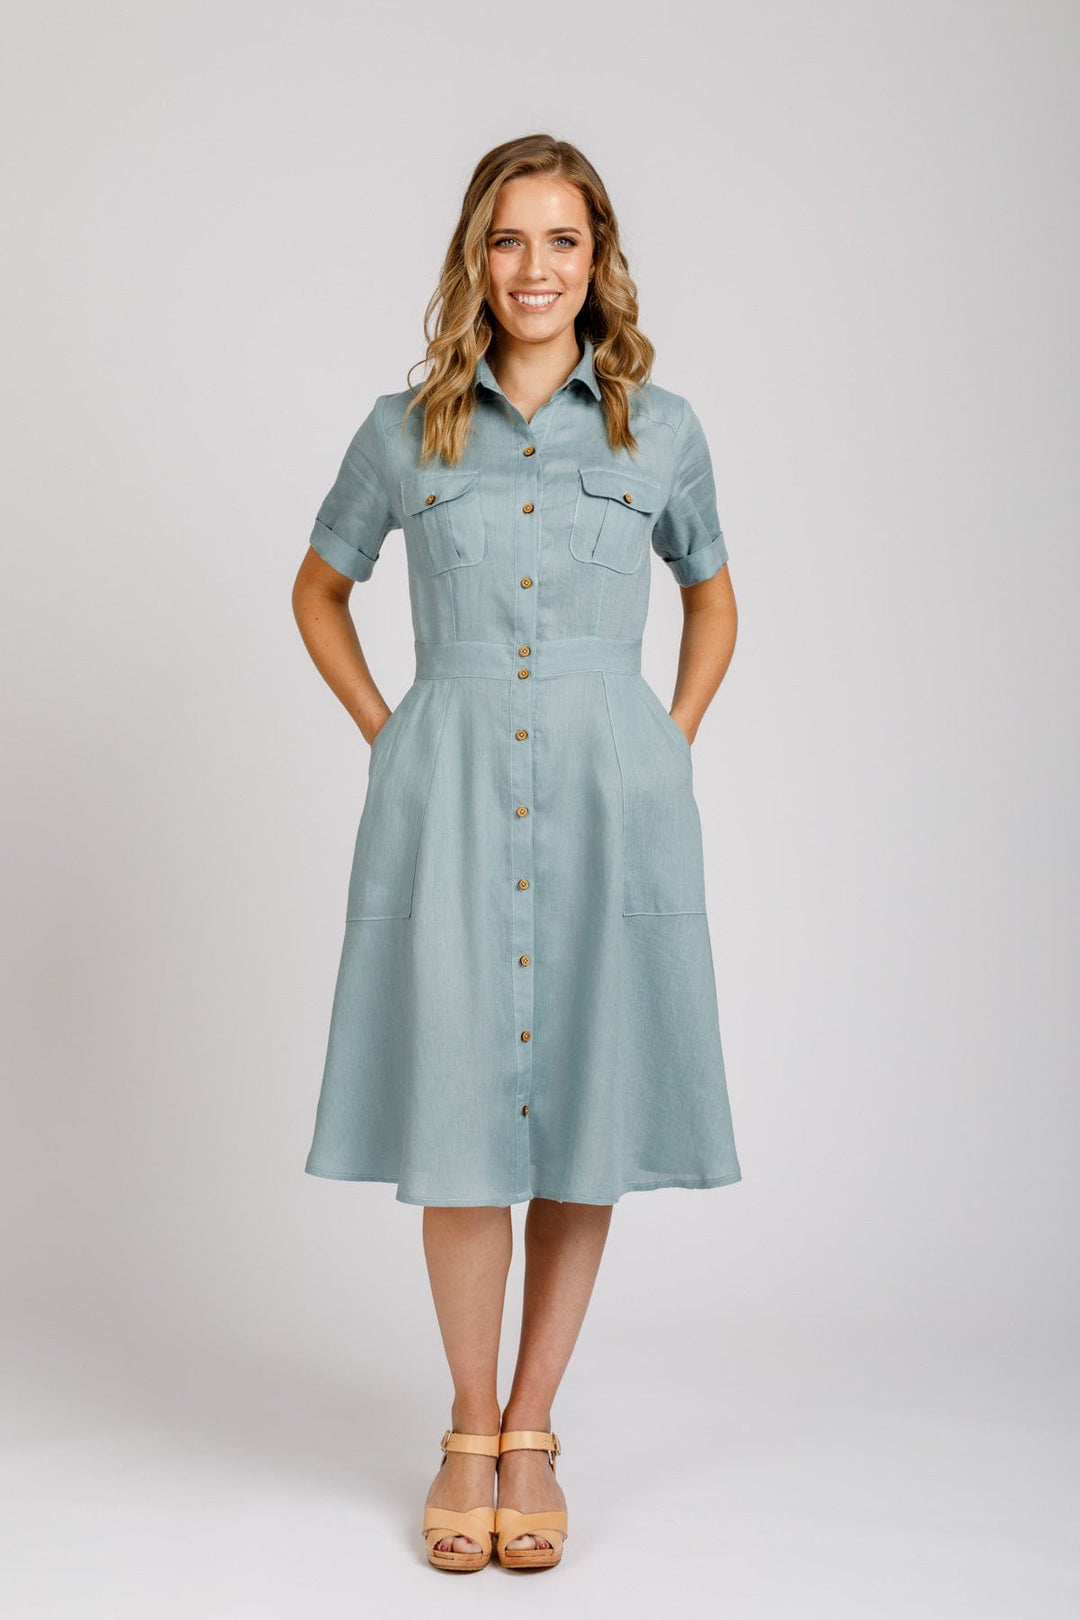 Matilda Shirt Dress - Sizes 0-20 - Megan Nielsen